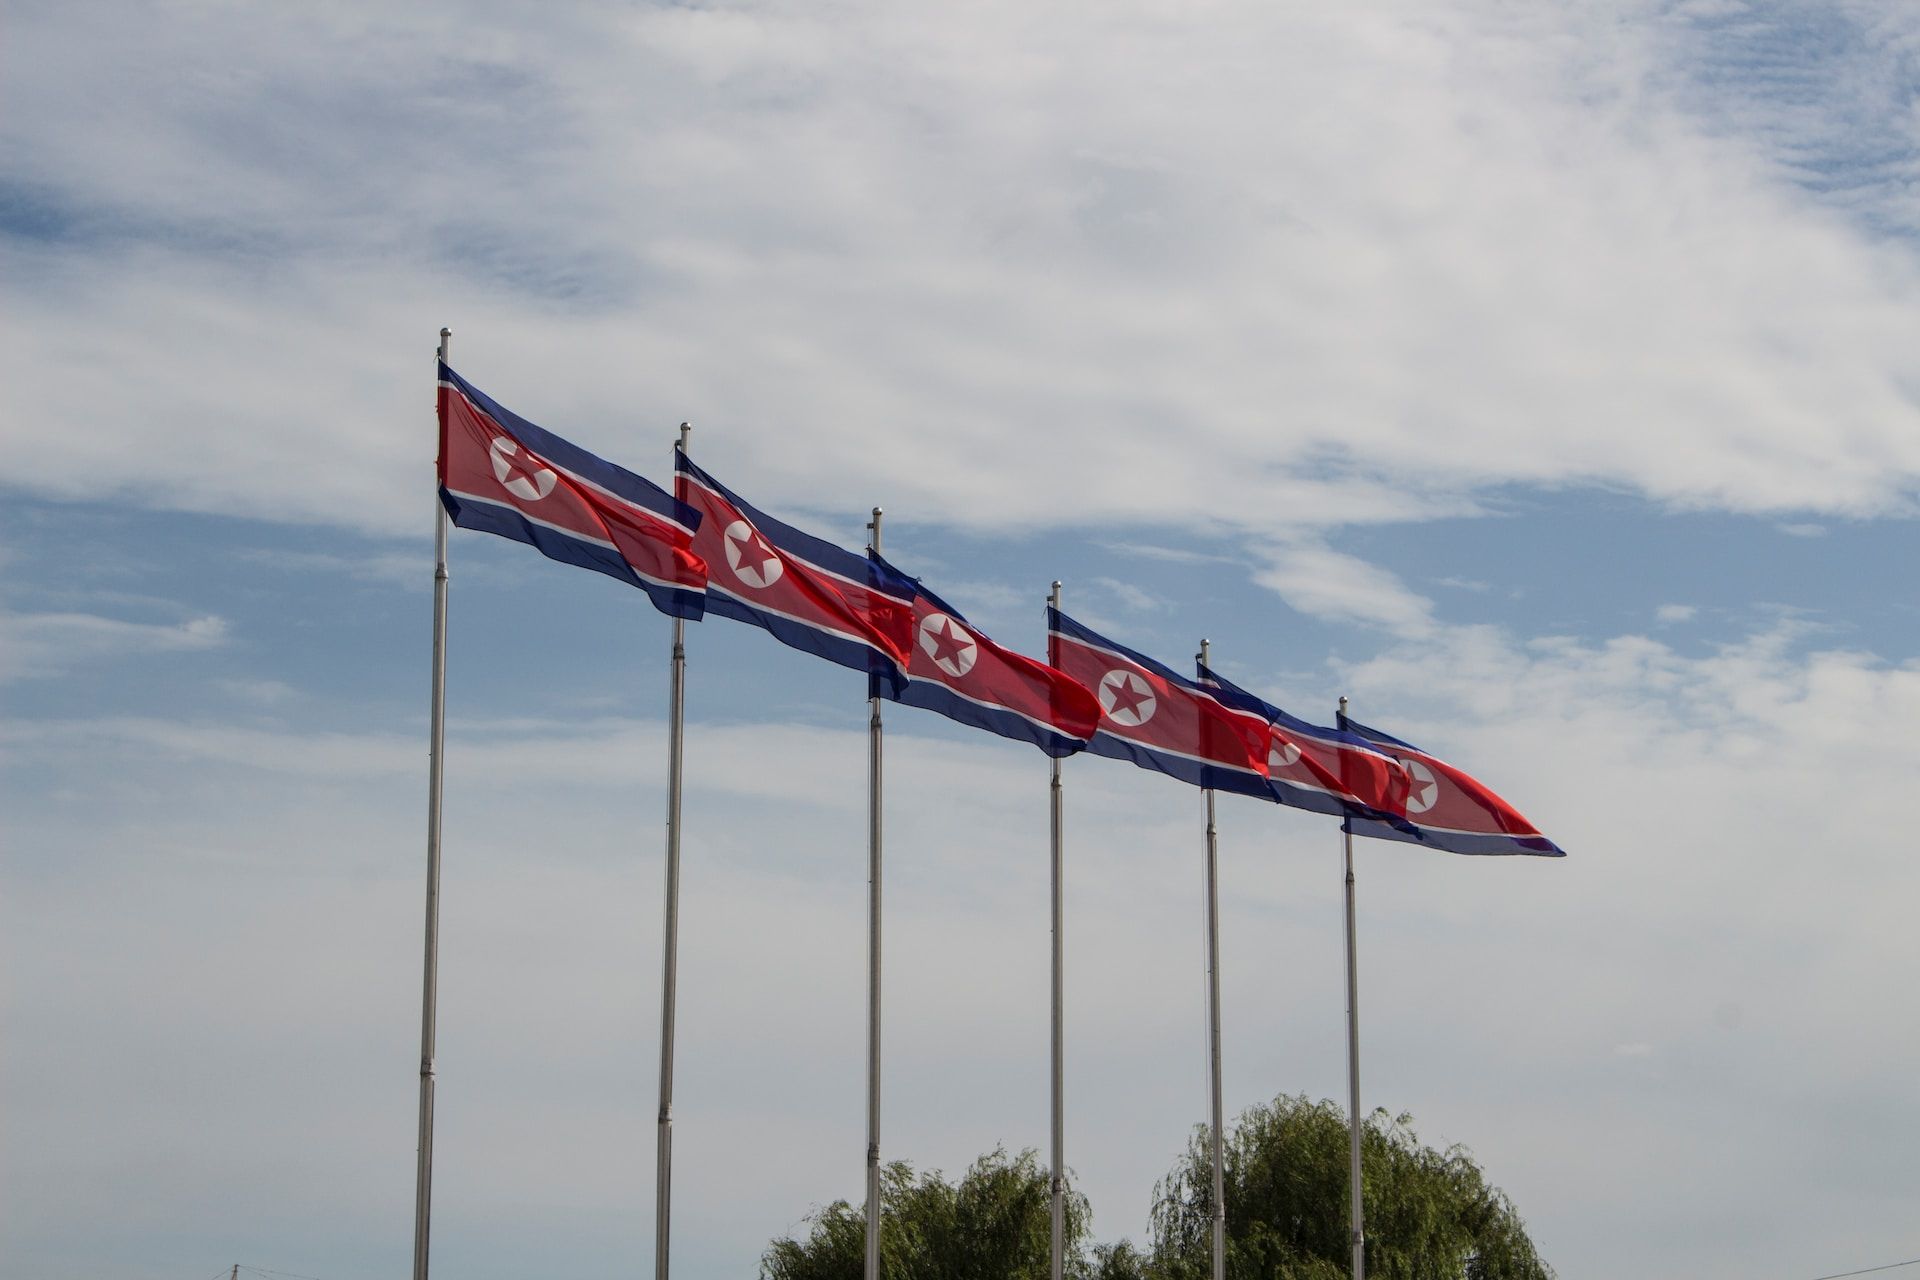 Bendera Korea Utara